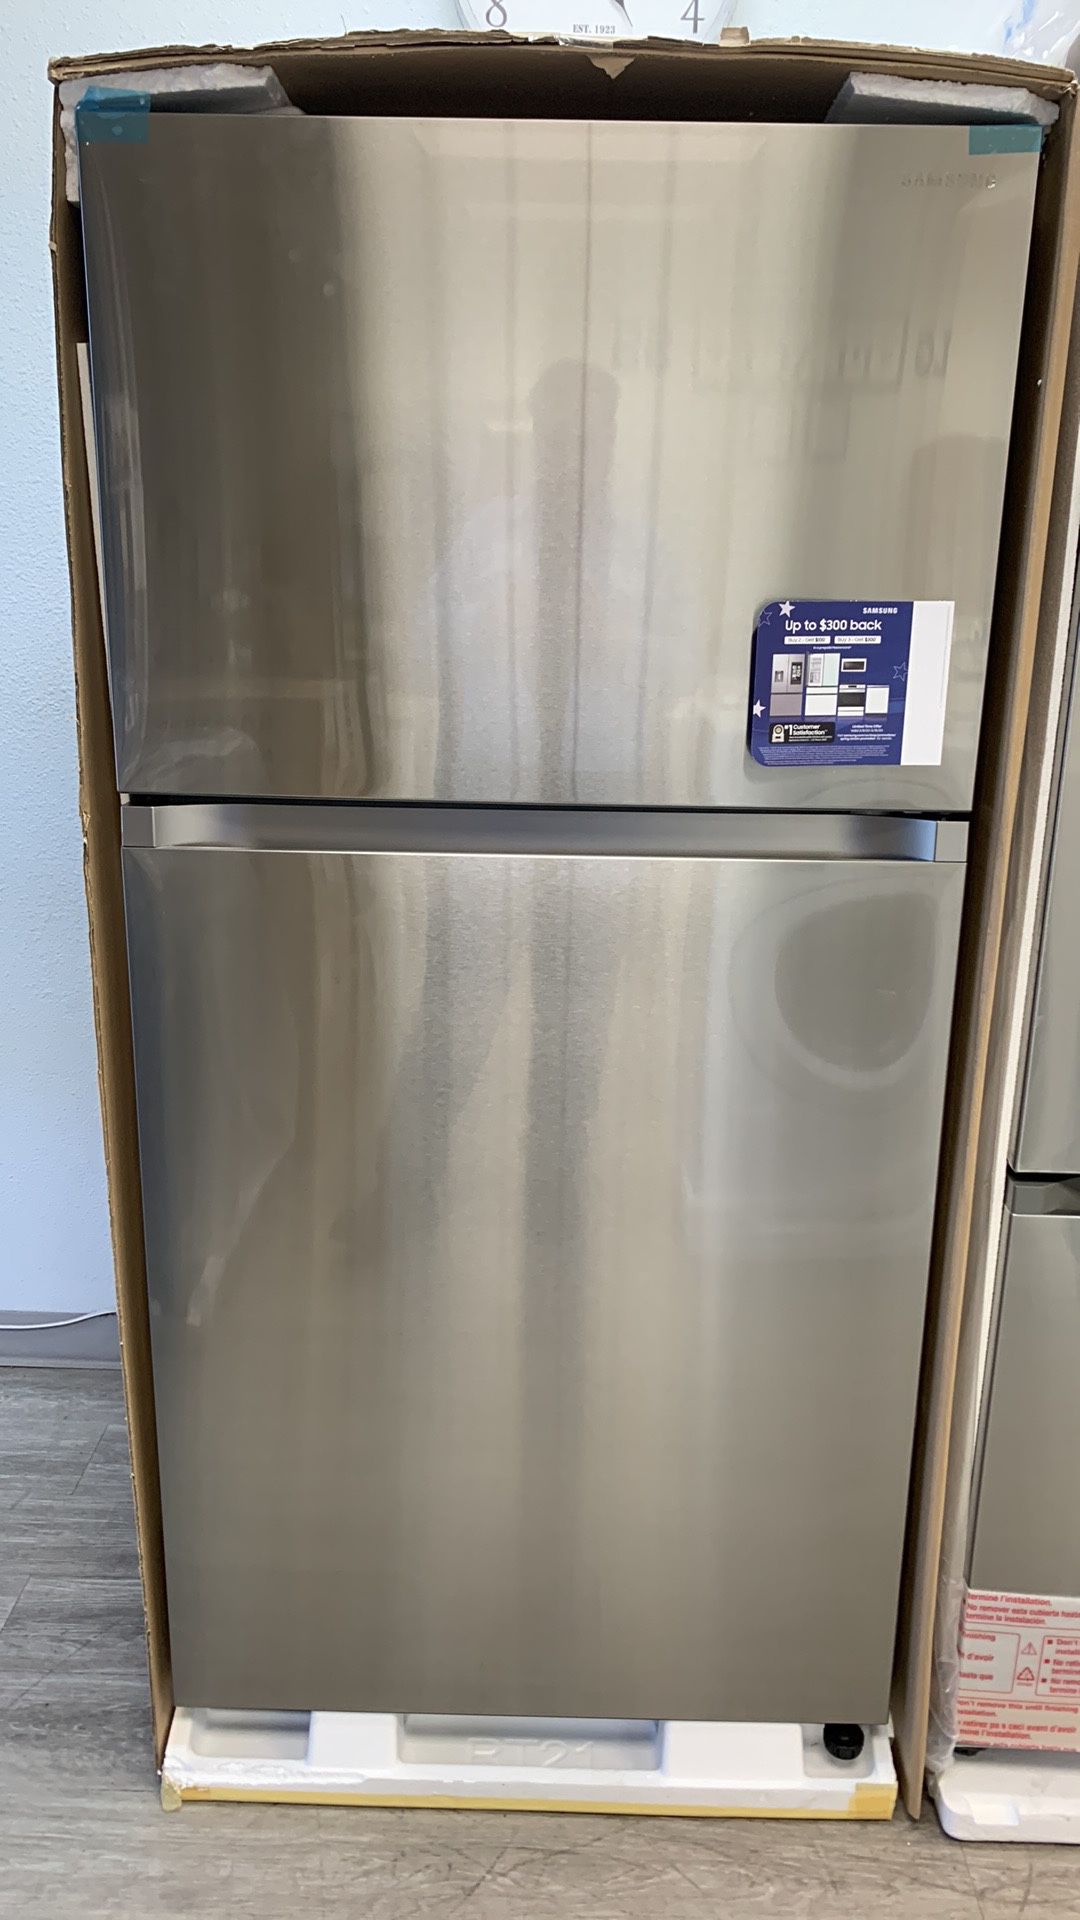 Refrigerator Top Freezer Samsung  